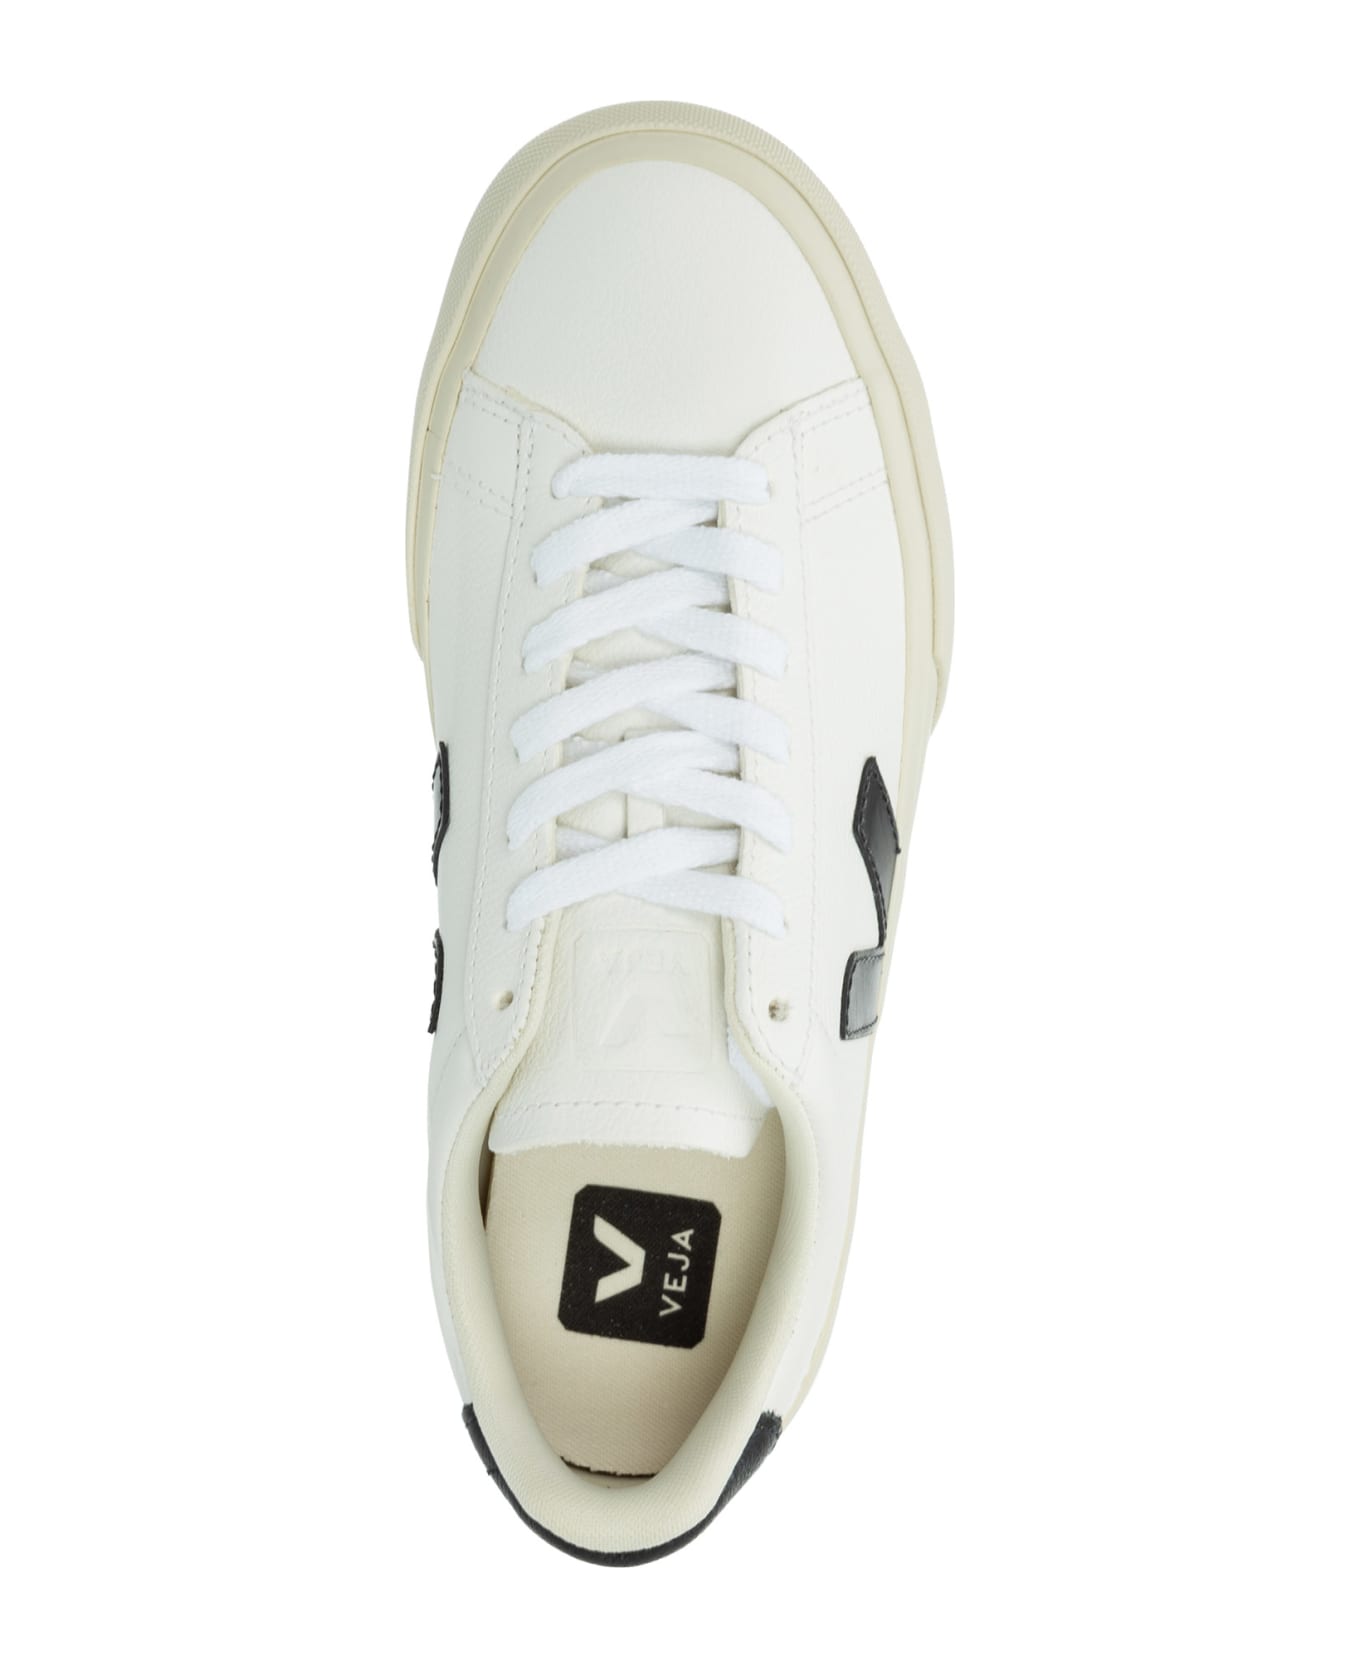 Veja Campo Leather Sneakers - White/black